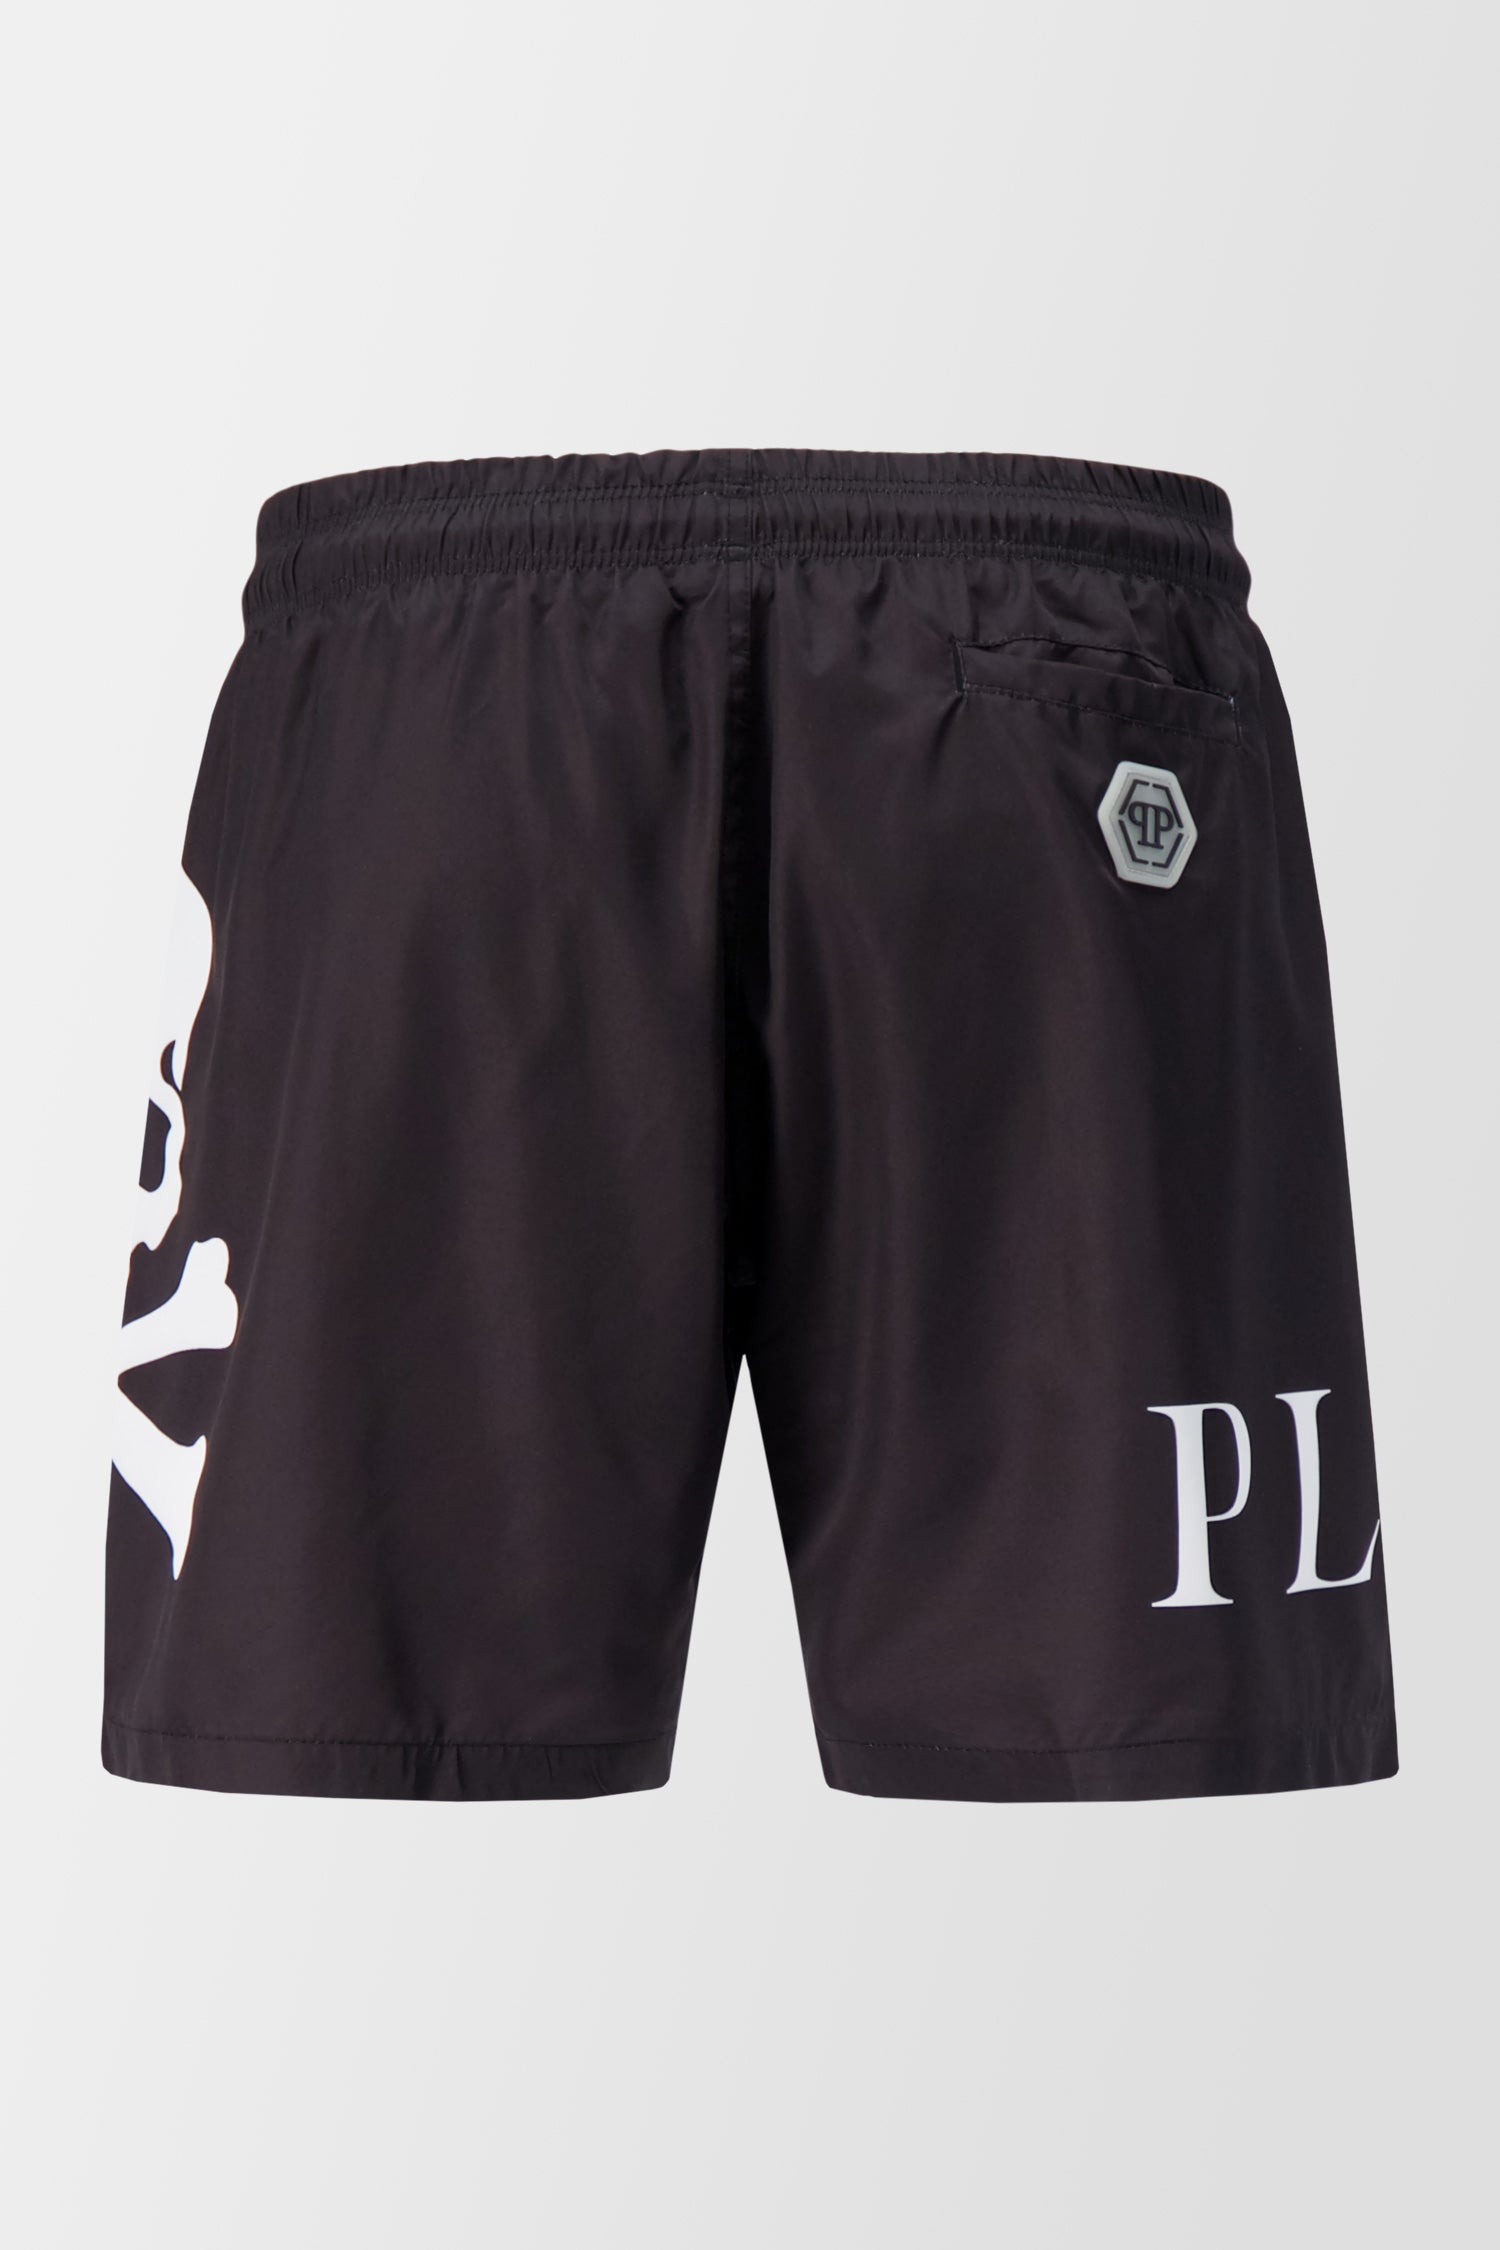 Philipp Plein Black Skull and Plein Beachwear Shorts